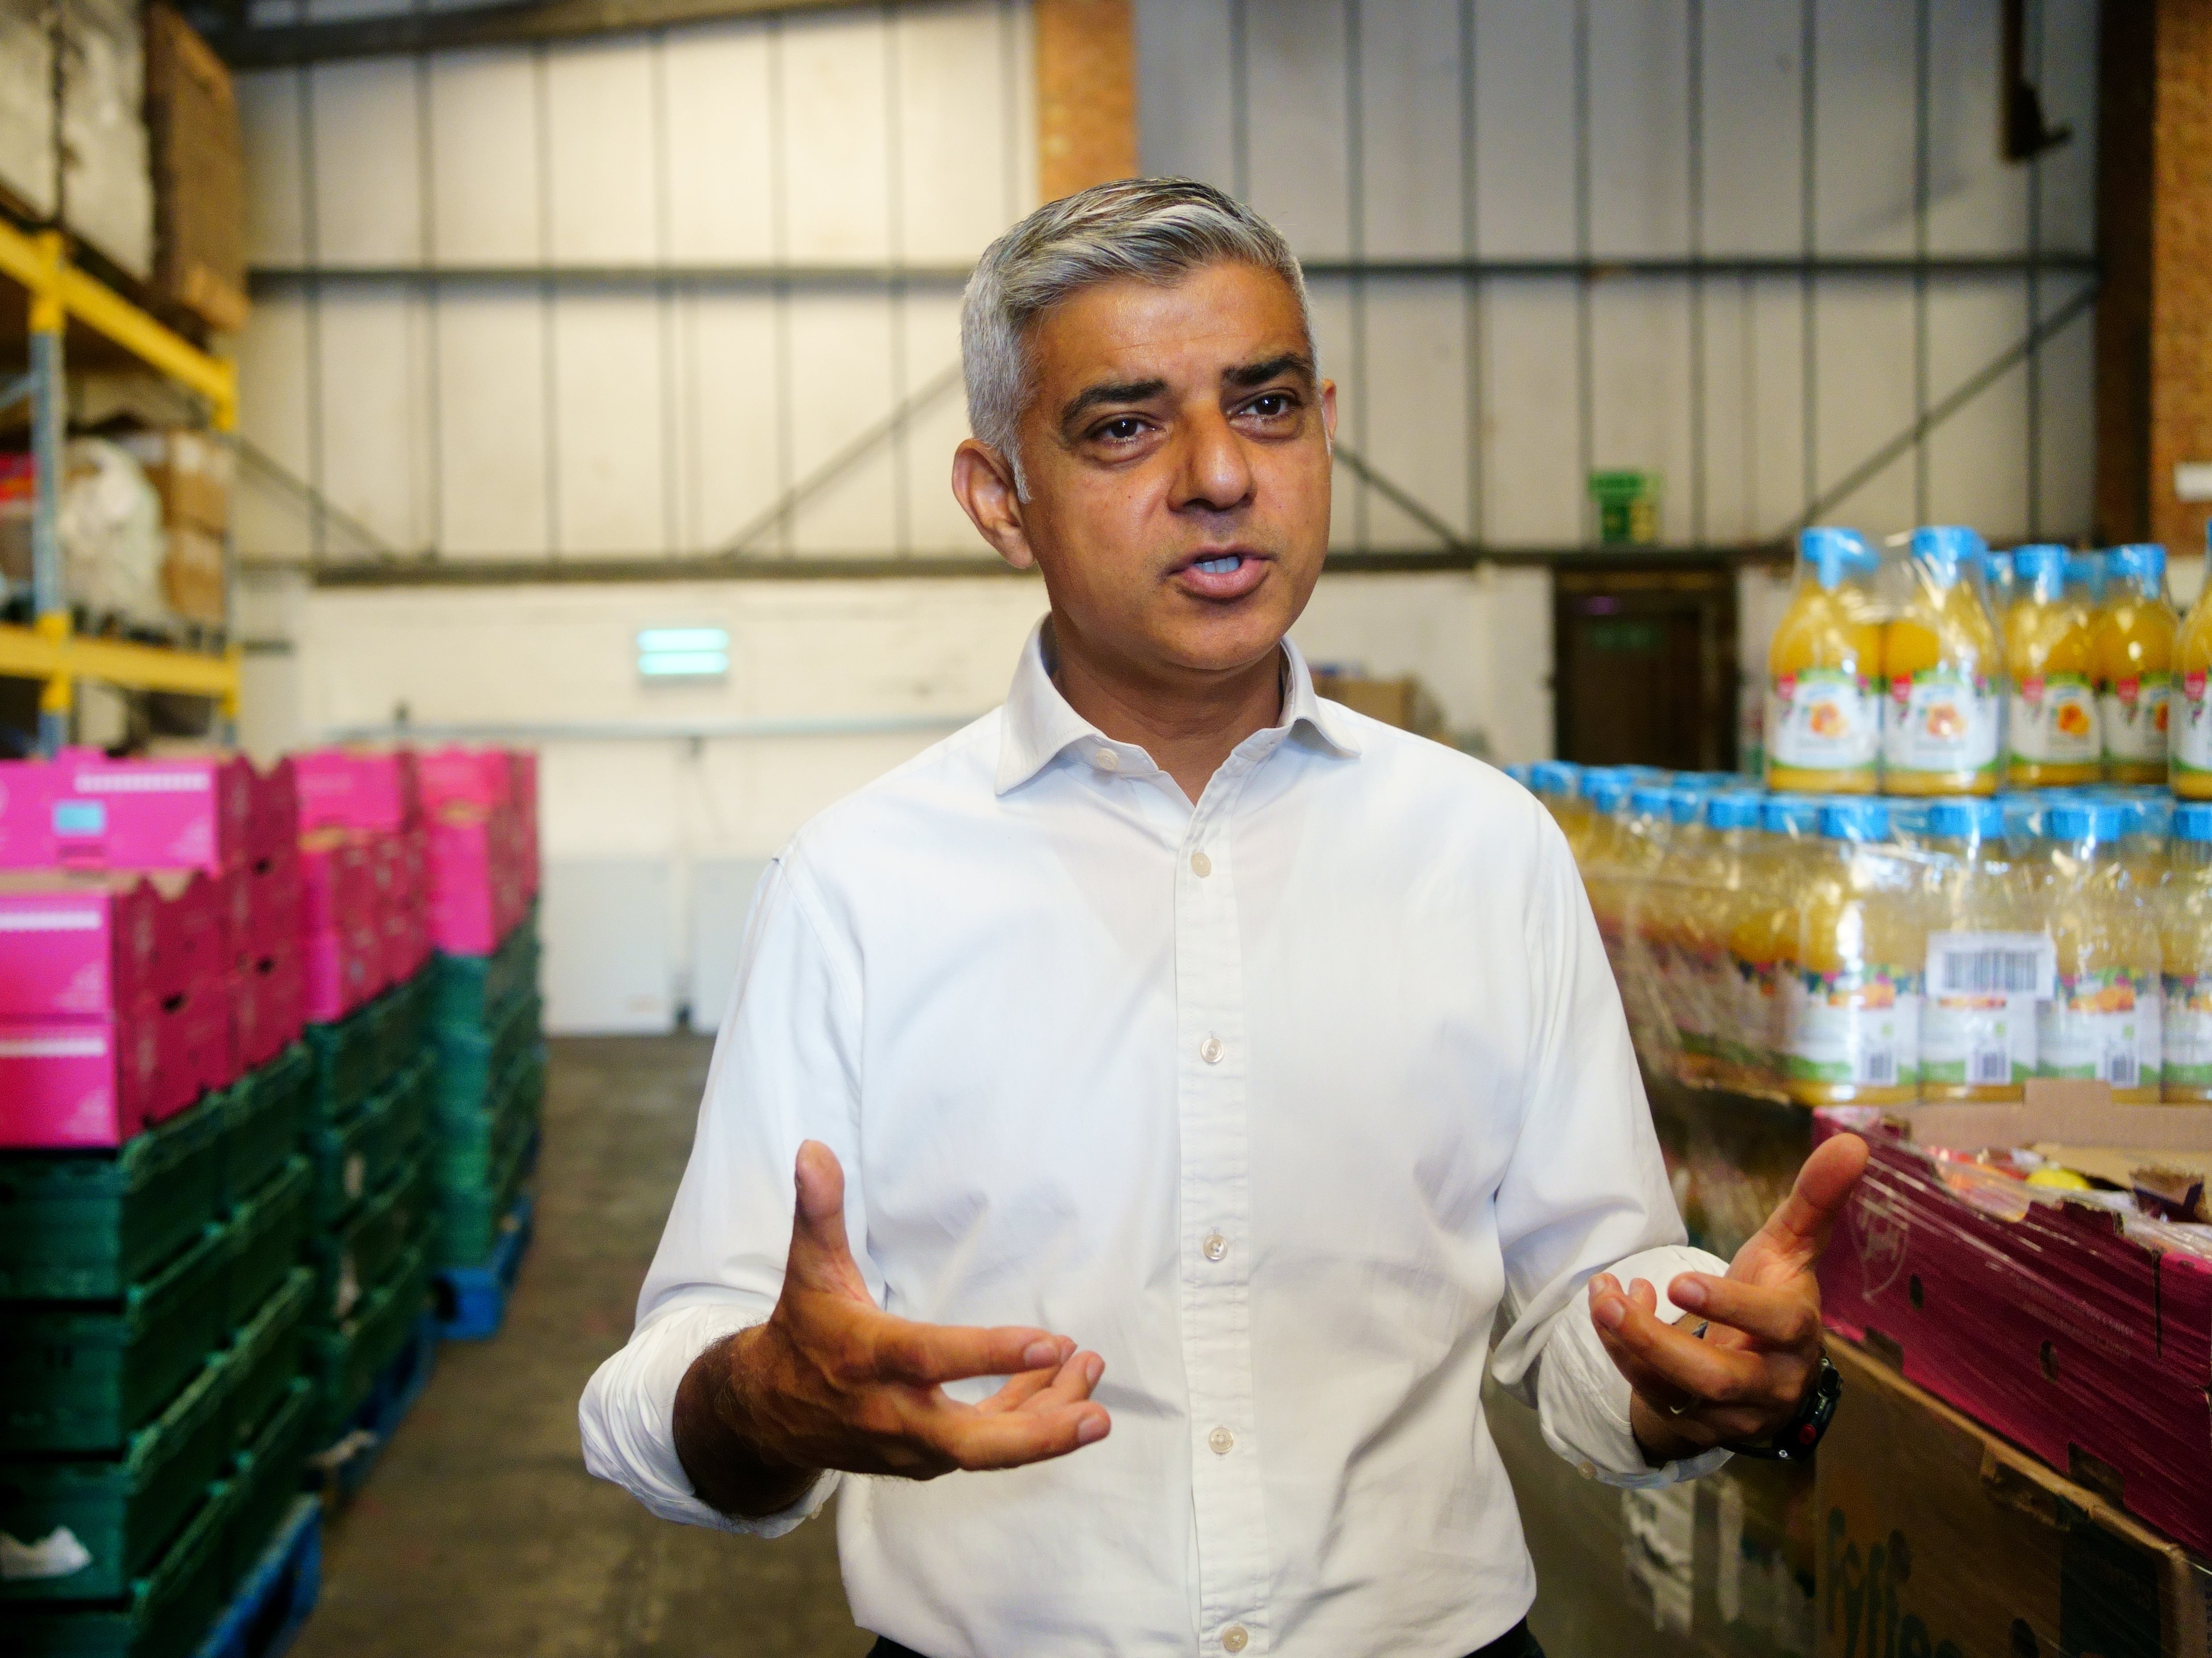 London mayor Sadiq Khan said cost-of-living crisis was already hitting those on lower incomes the hardest